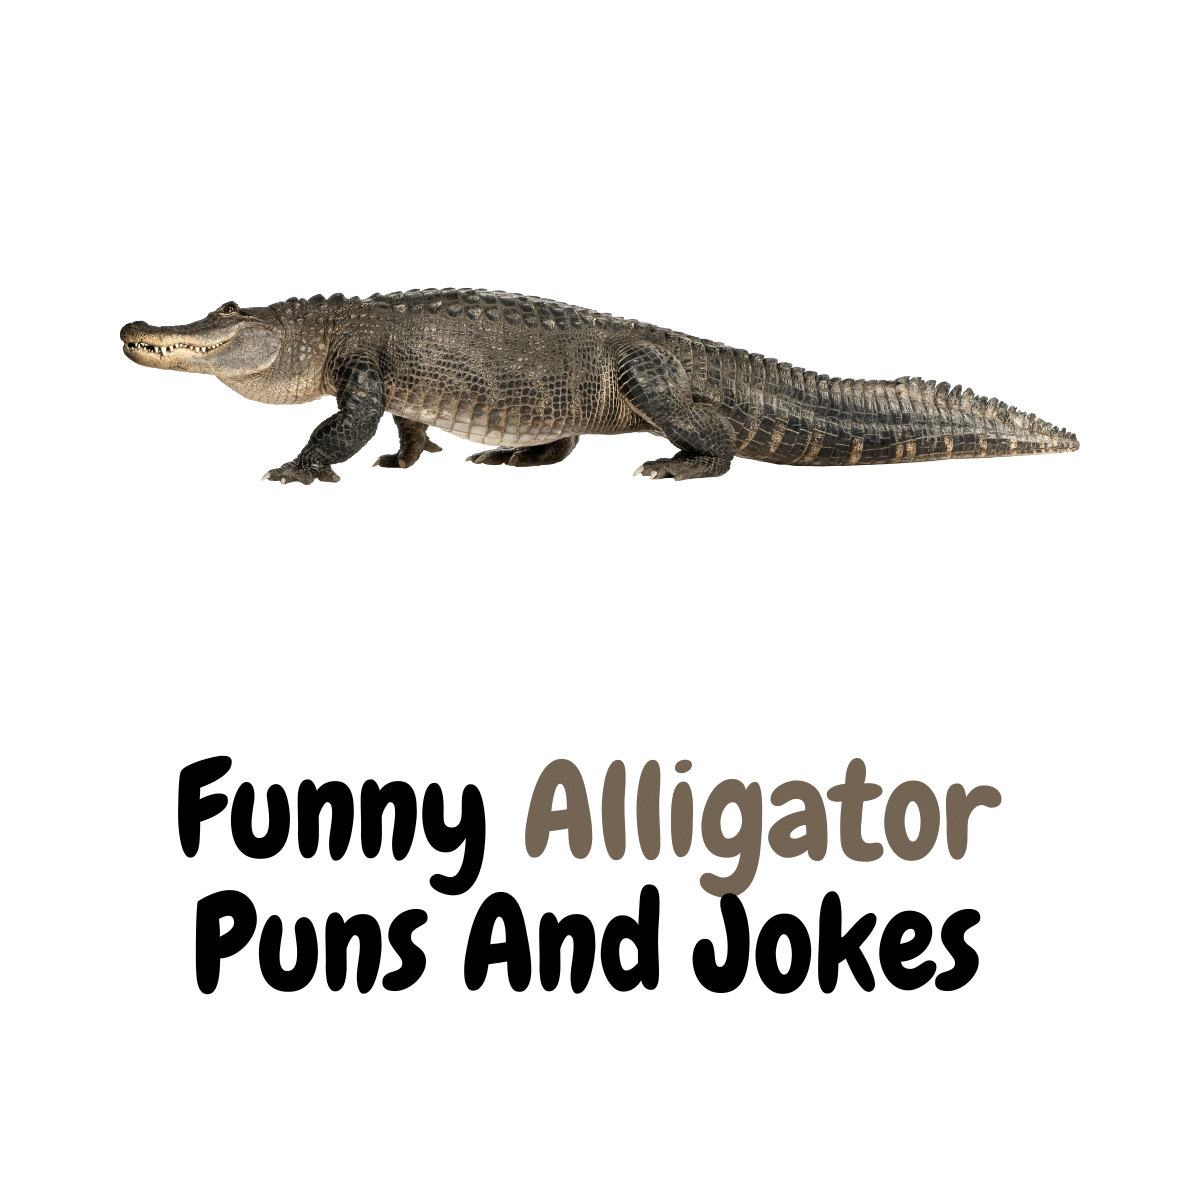 120+ Funny Alligator Puns And Jokes: Chomp on Humor - Funniest Puns